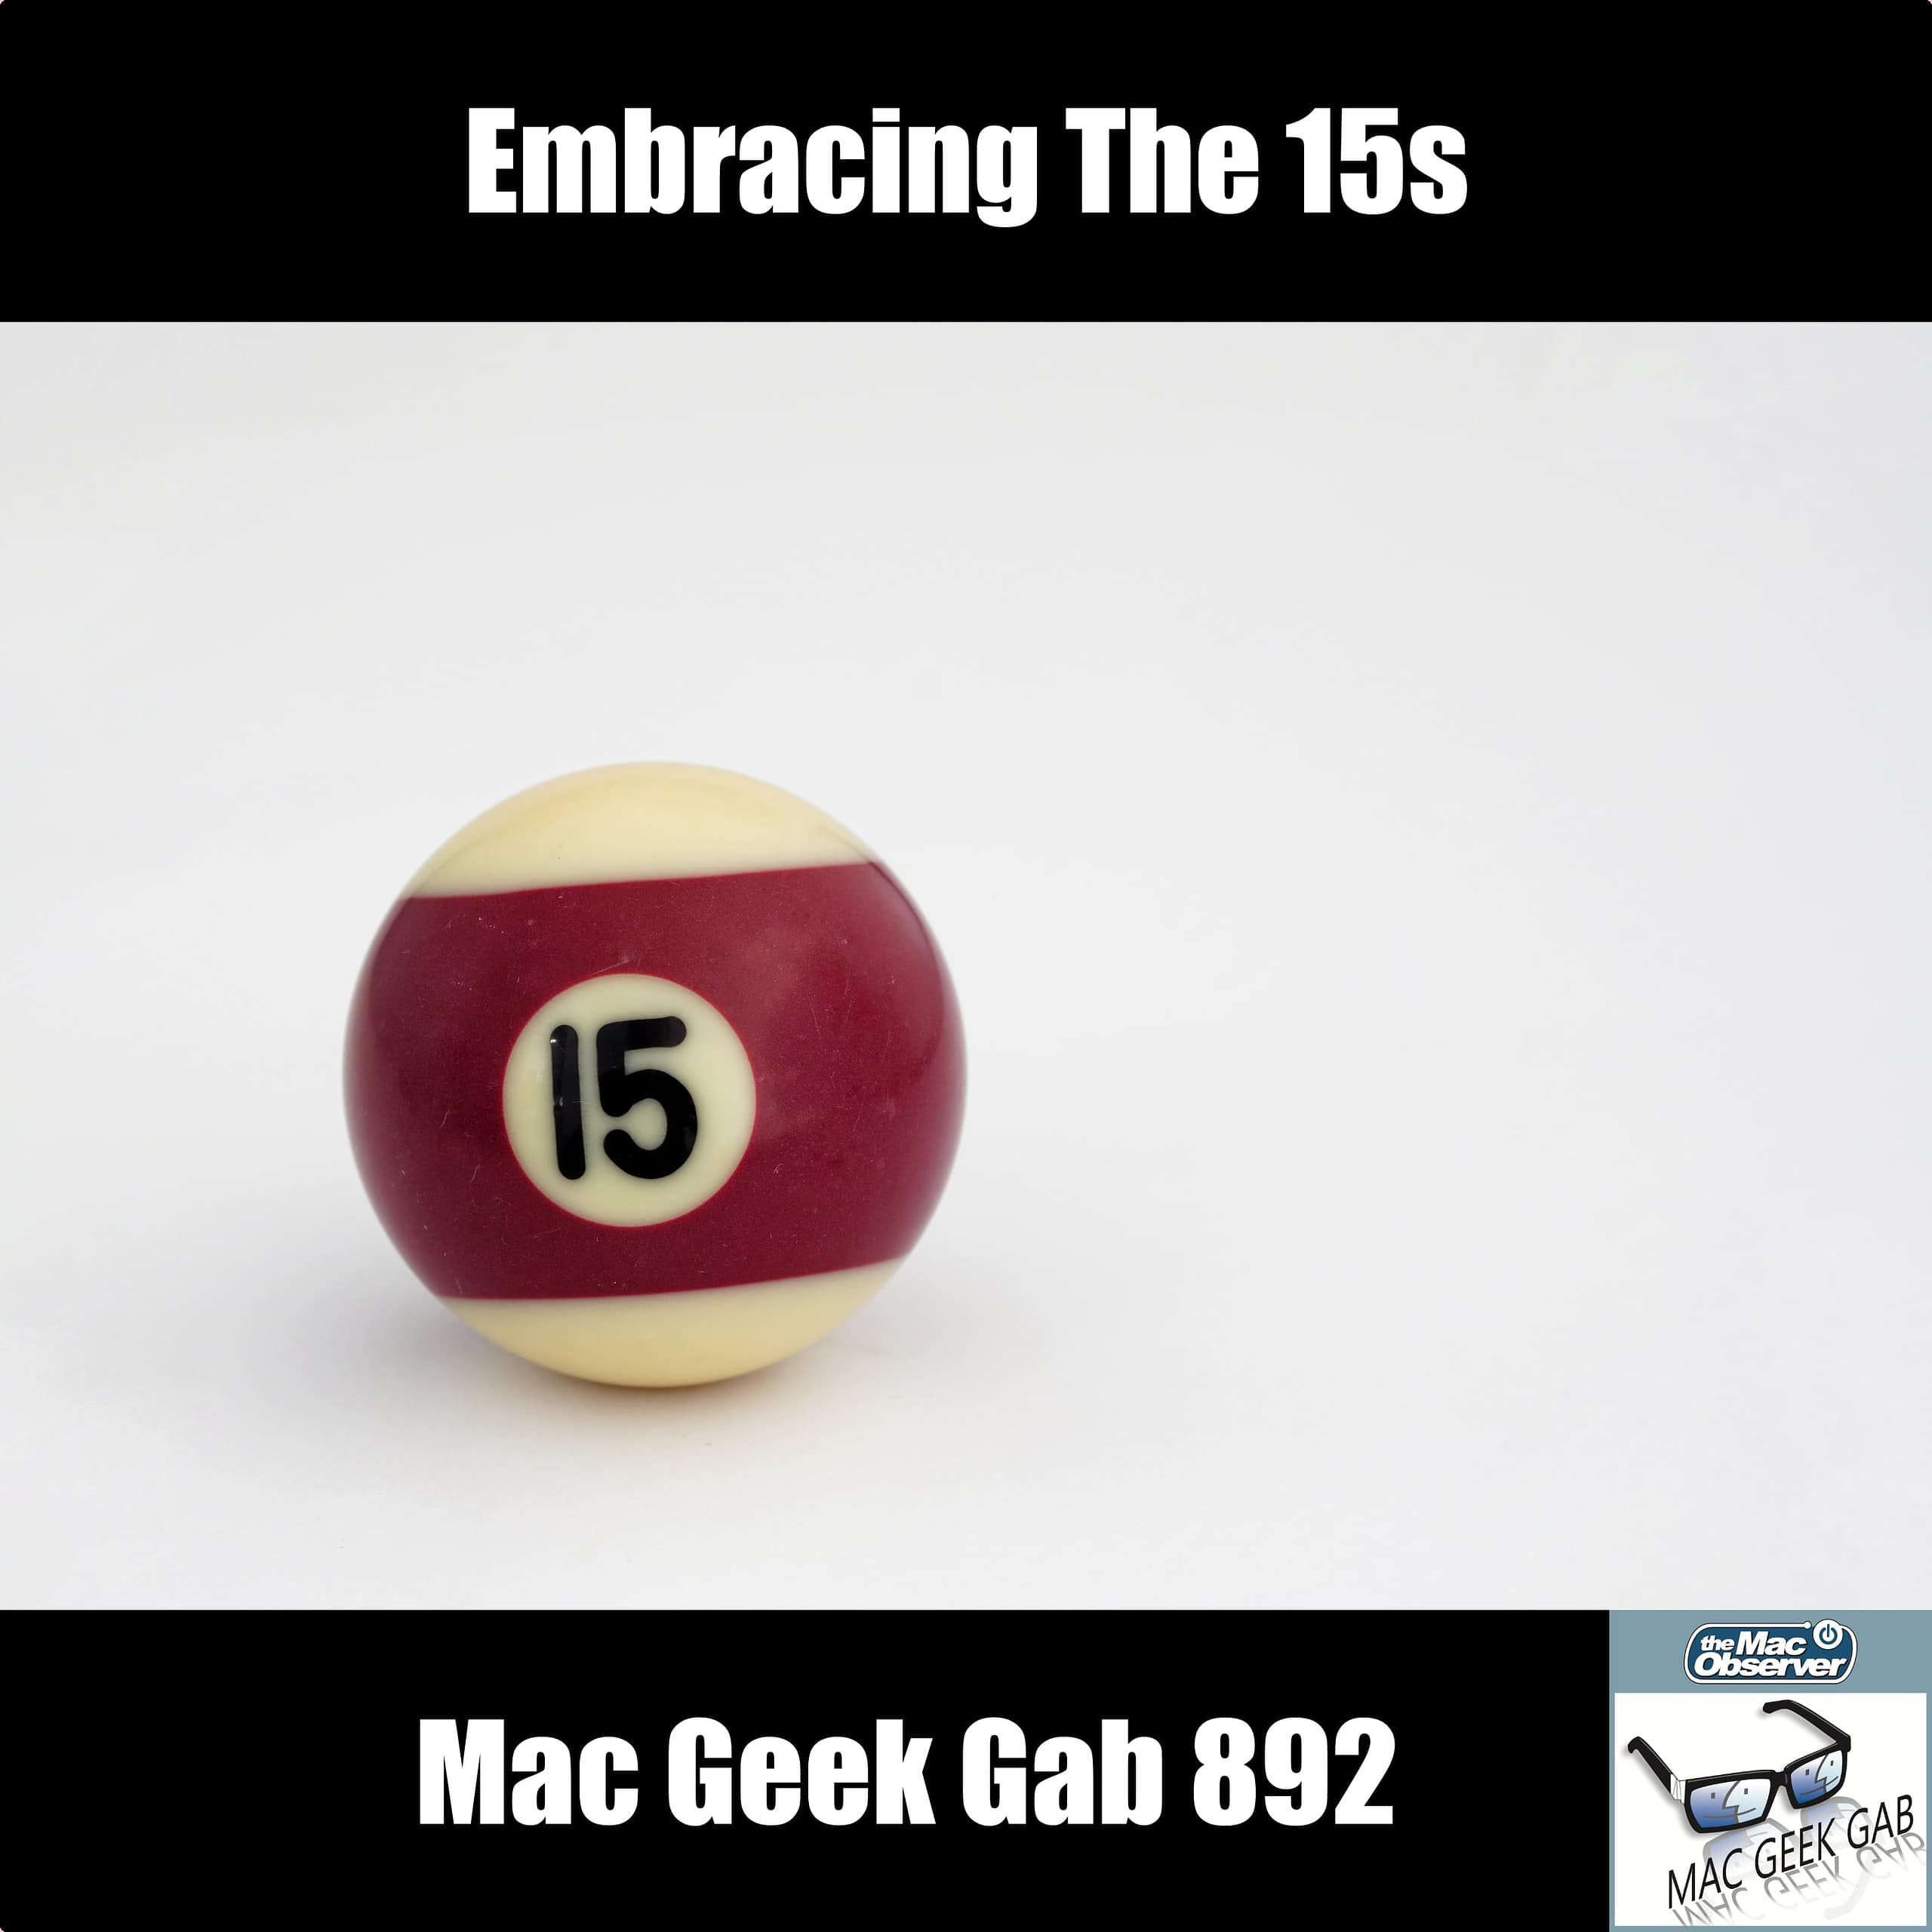 Embracing the 15s — Mac Geek Gab 892